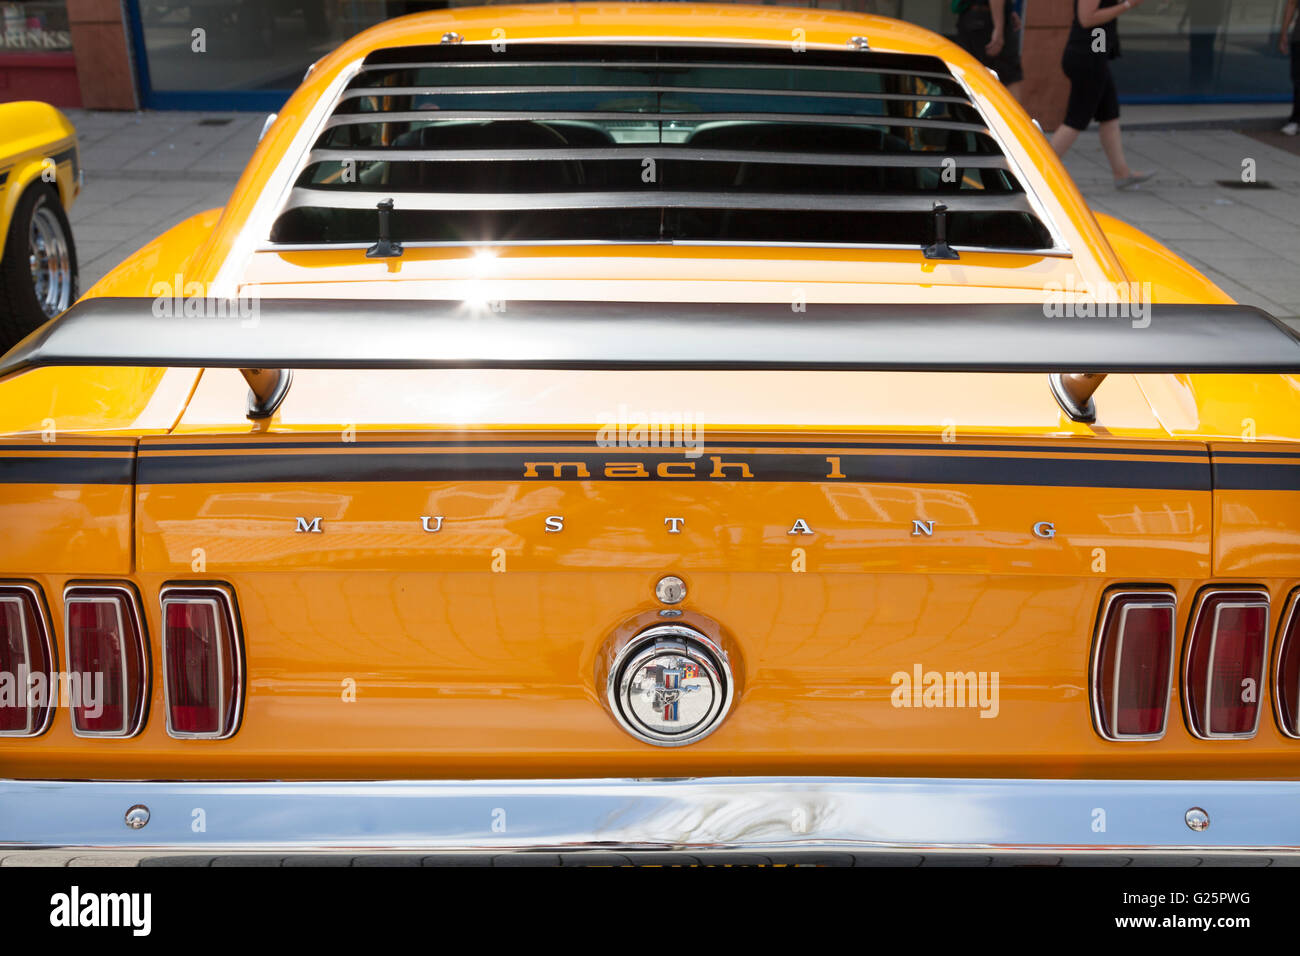 Ford Mustang jaune, Angleterre, Grande-Bretagne Banque D'Images